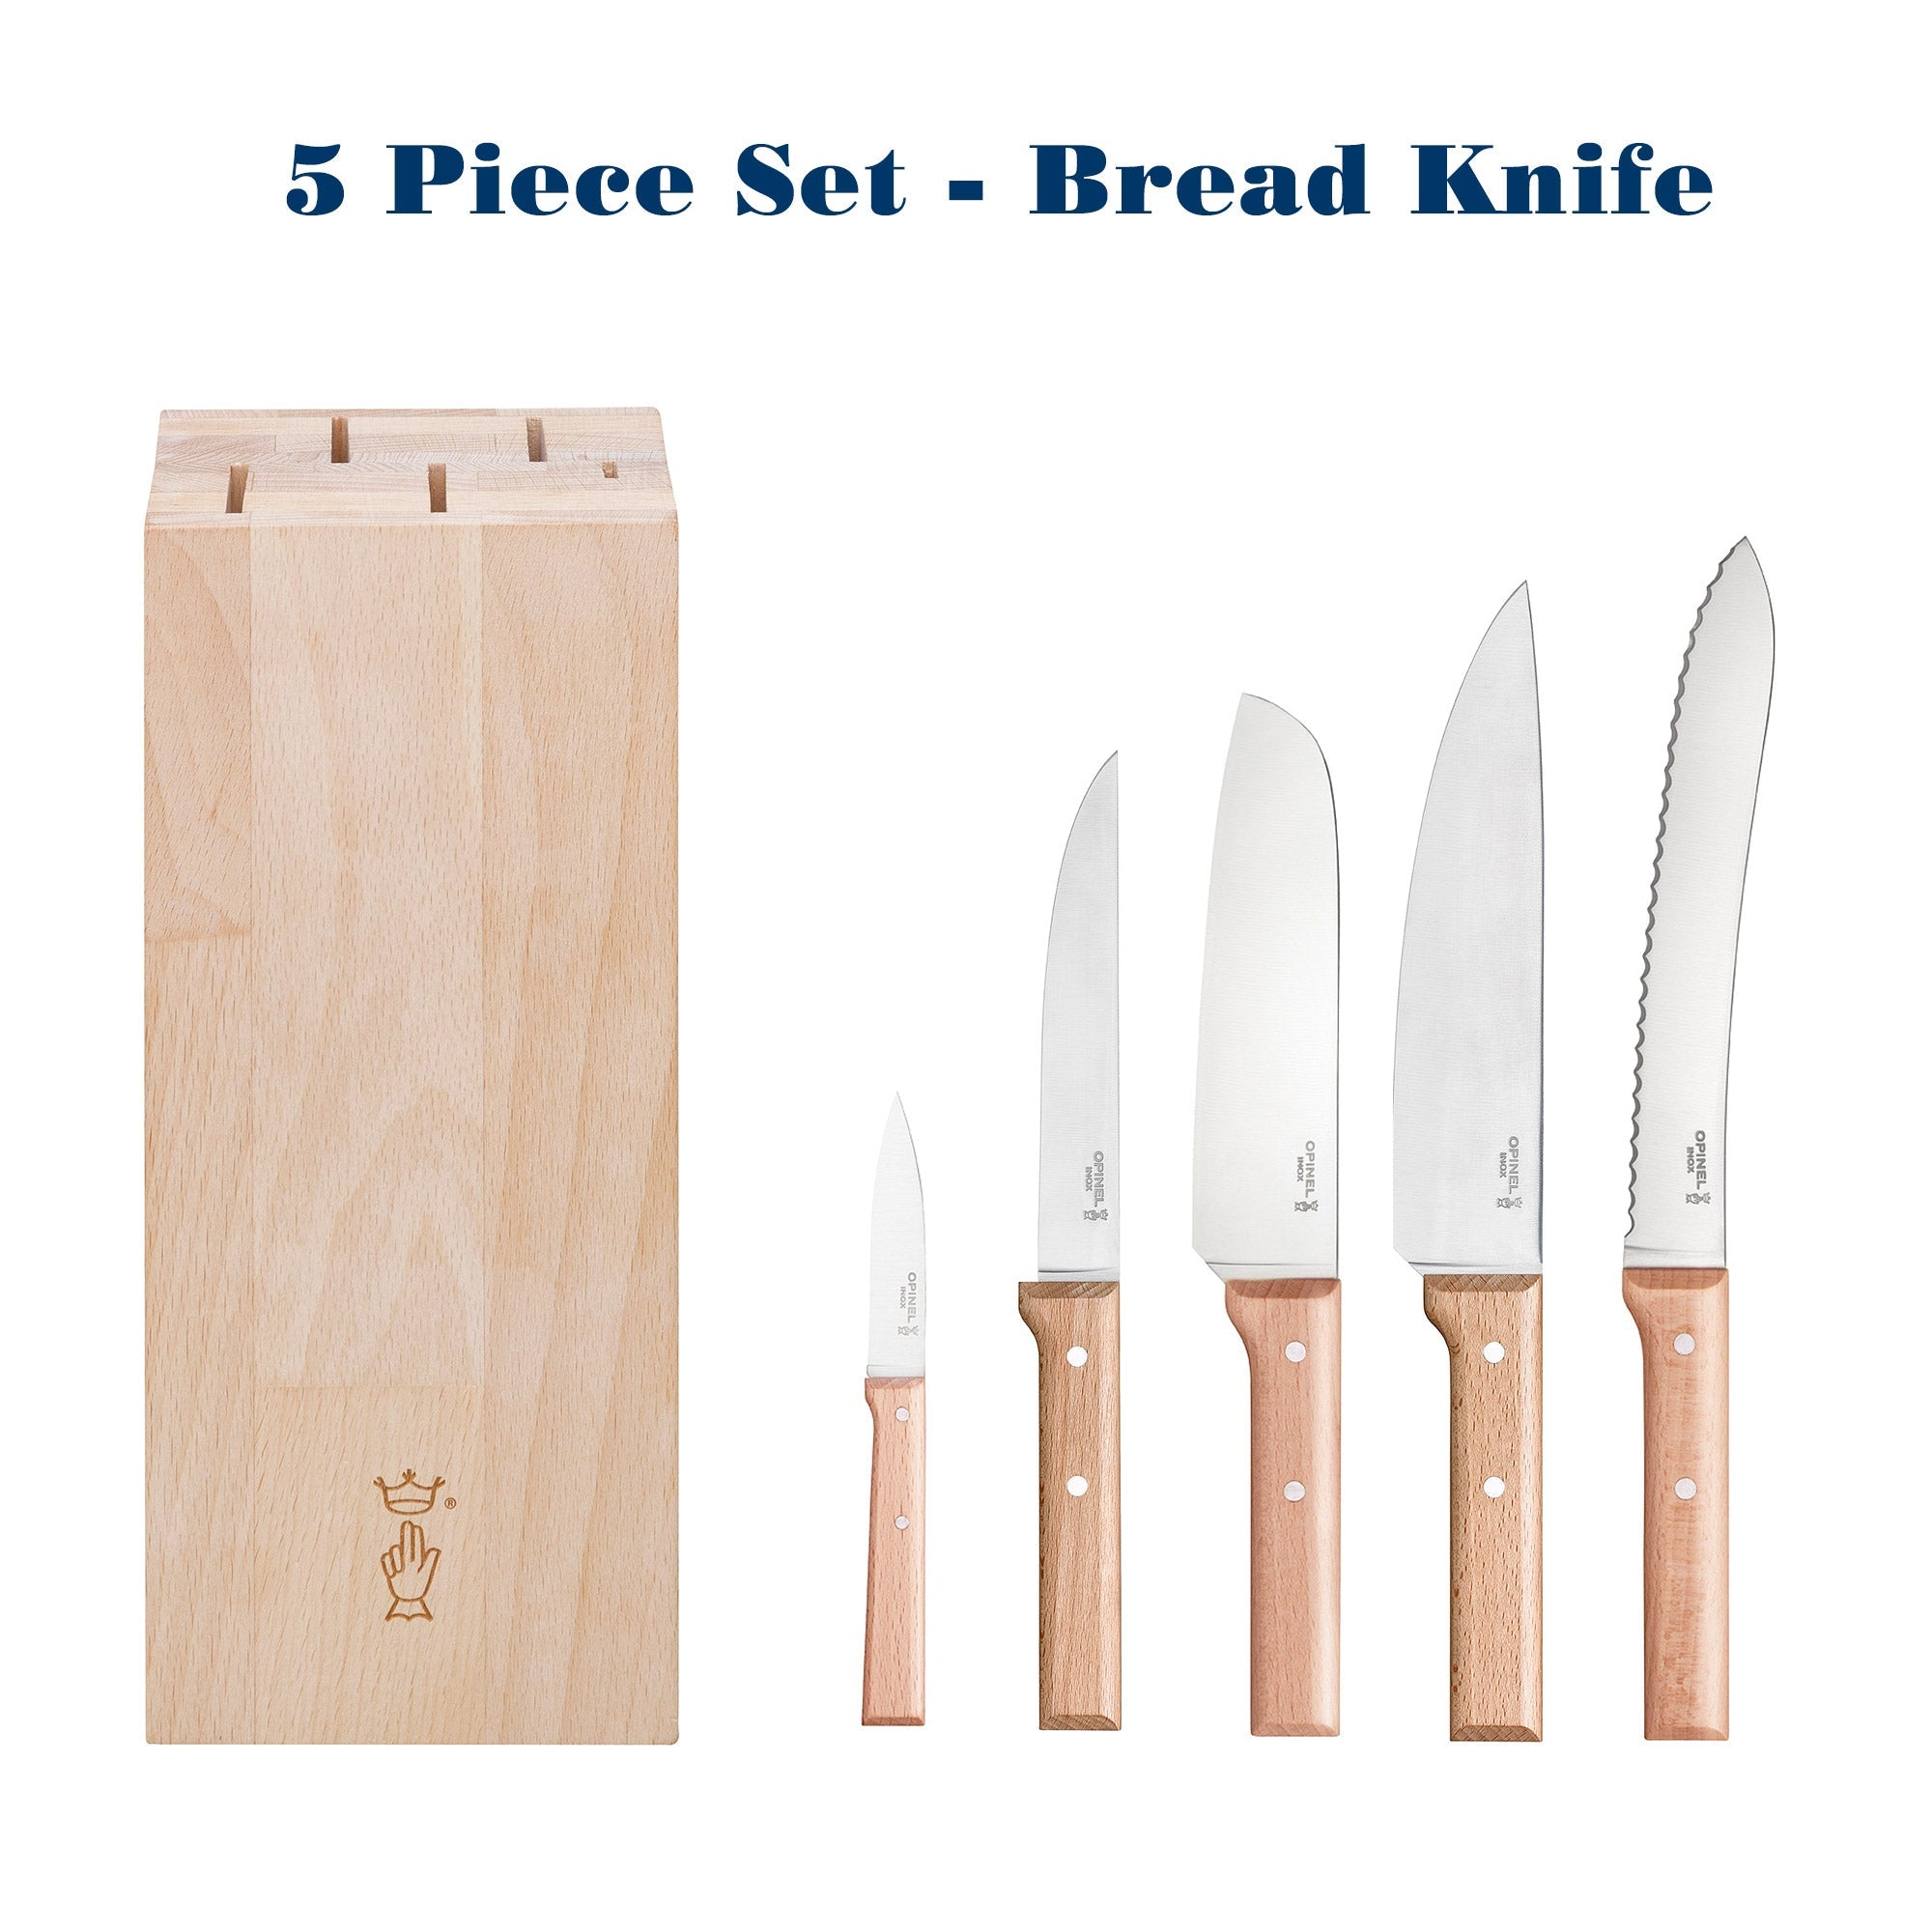 Opinel Parallele 5-Piece Knife Block Set